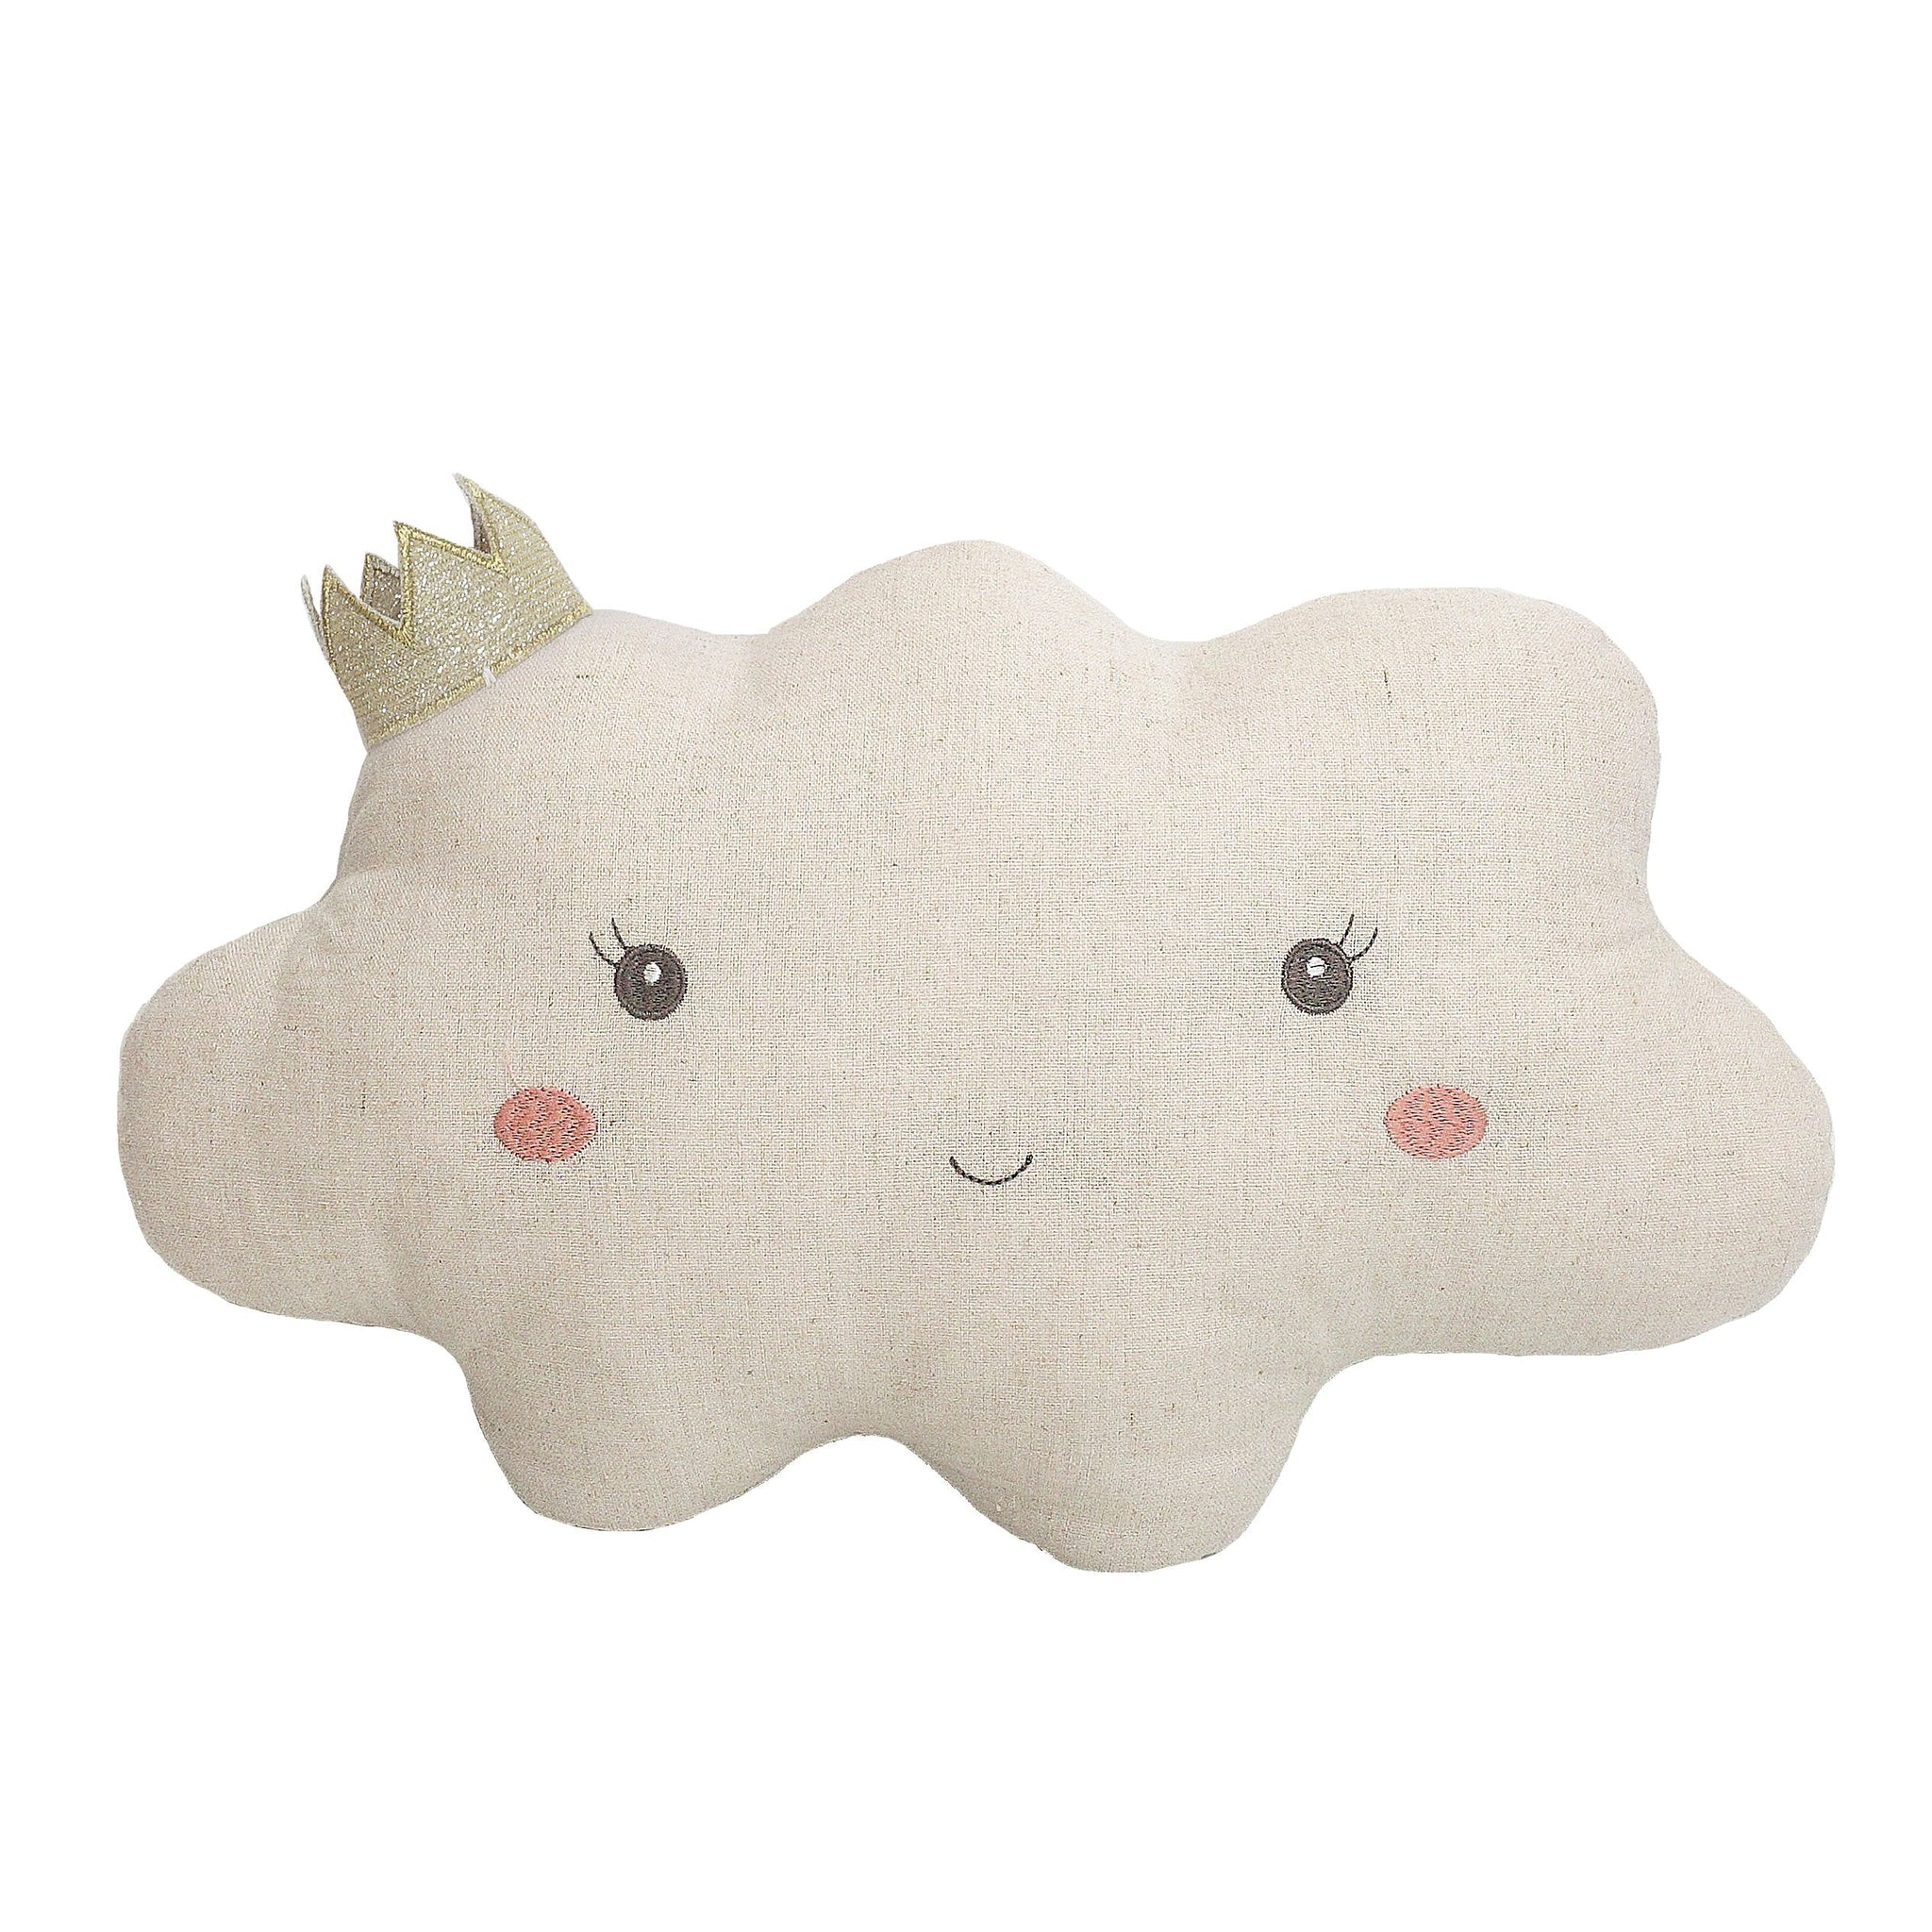 Reine Cloud  Pillow - HoneyBug 